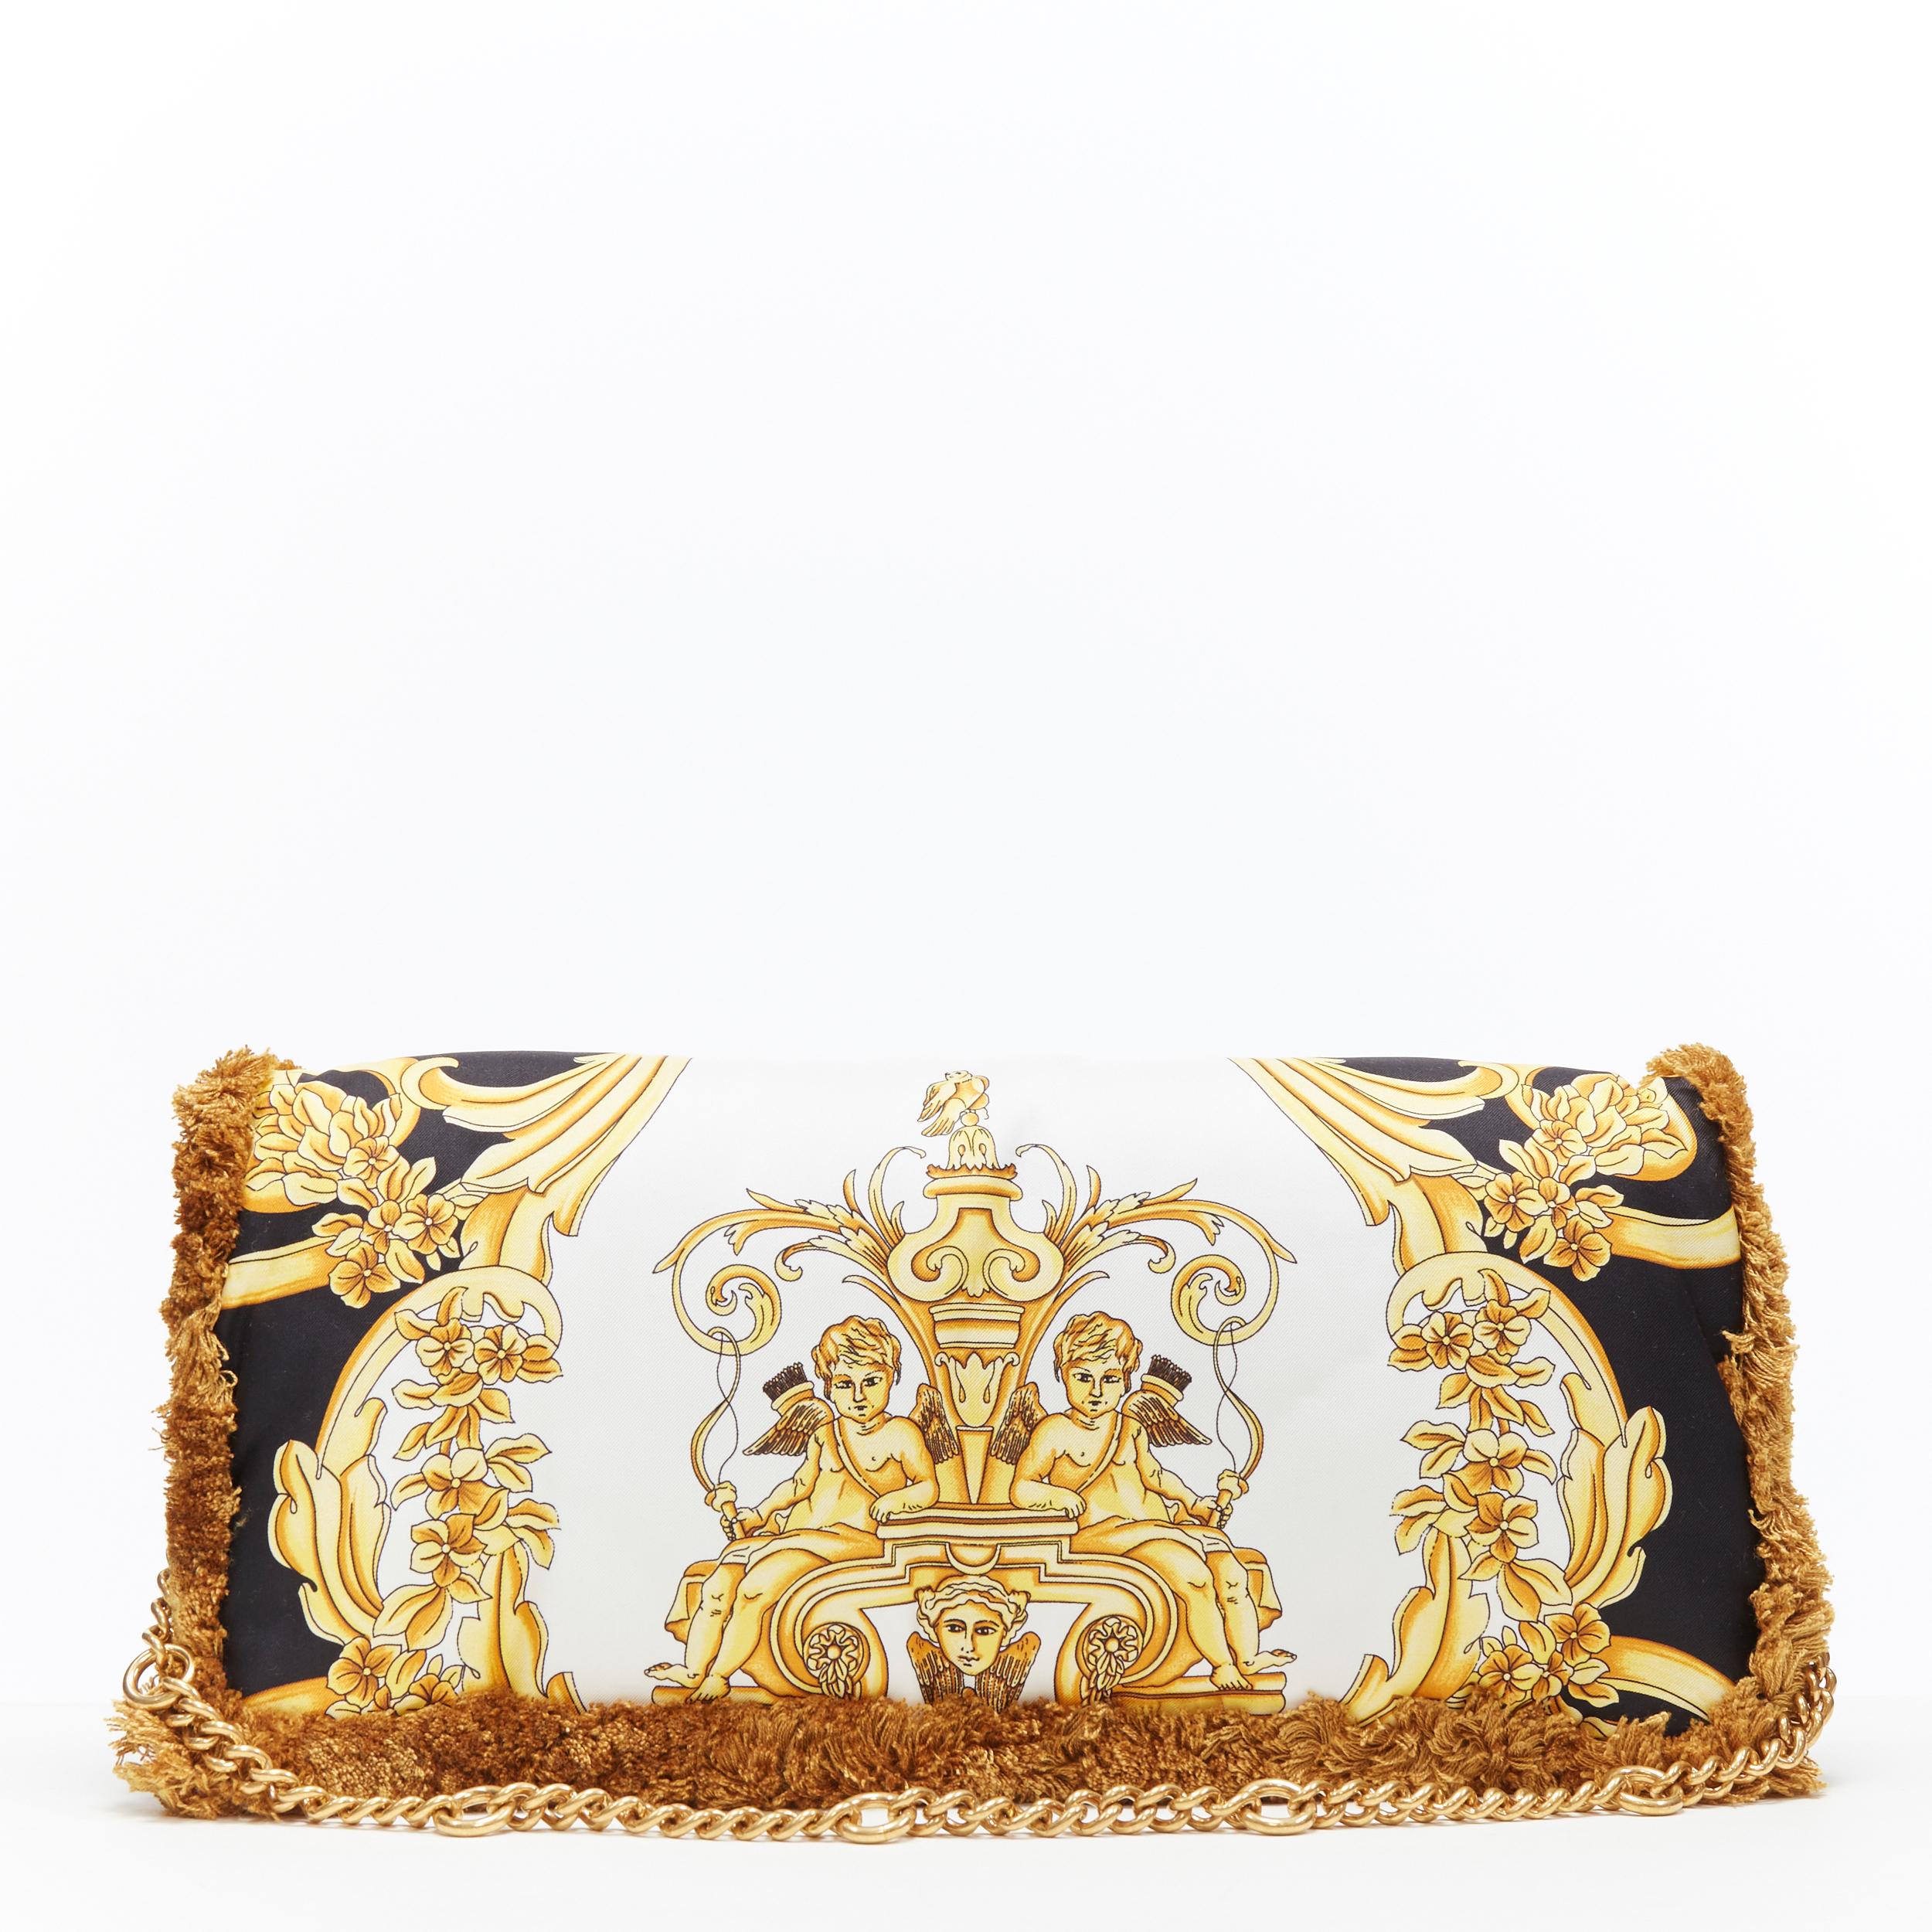 Women's new VERSACE 2018 Pillow Talk gold black baroque print silk tassel shoulder bag